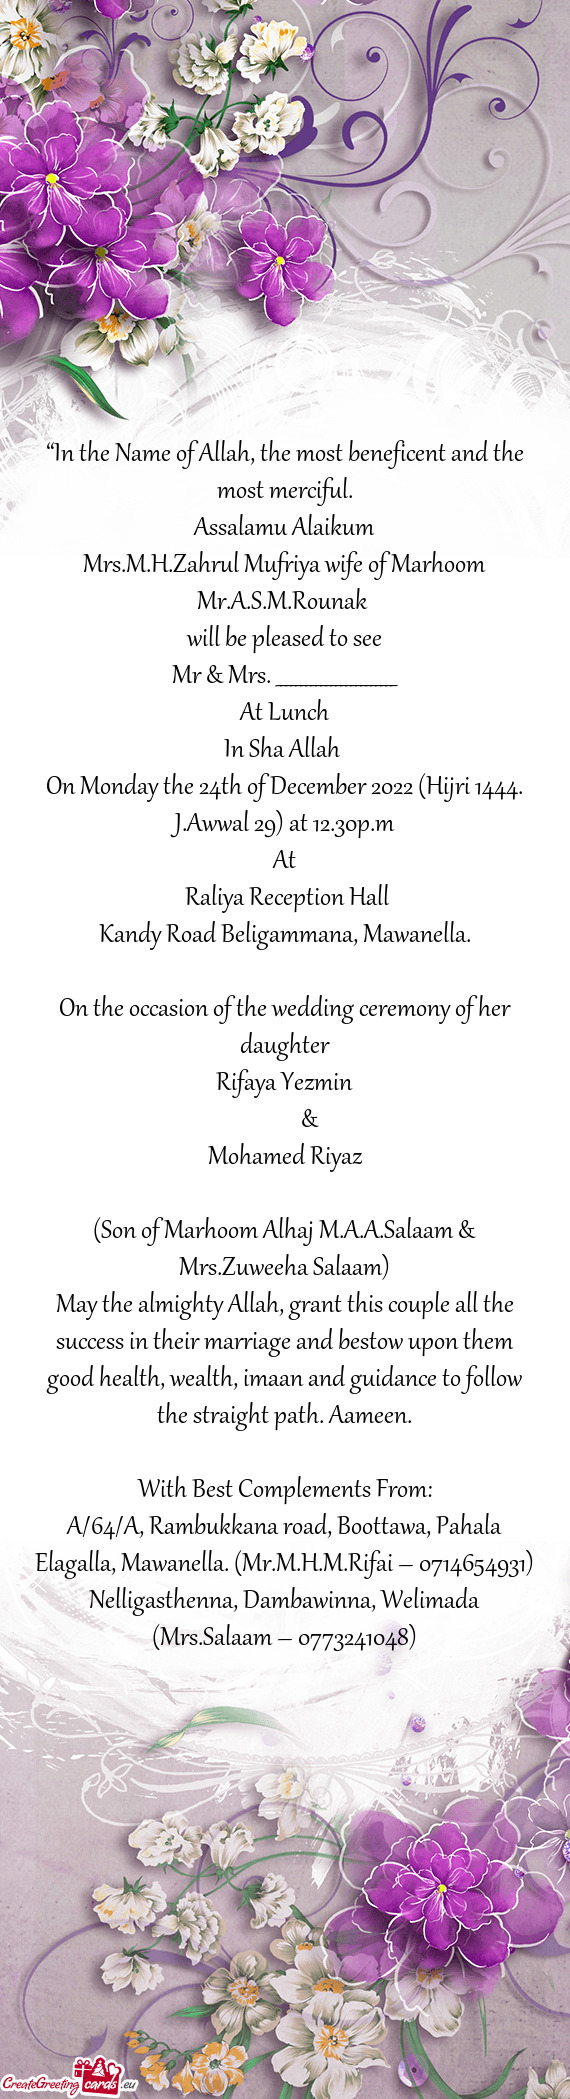 Mrs.M.H.Zahrul Mufriya wife of Marhoom Mr.A.S.M.Rounak